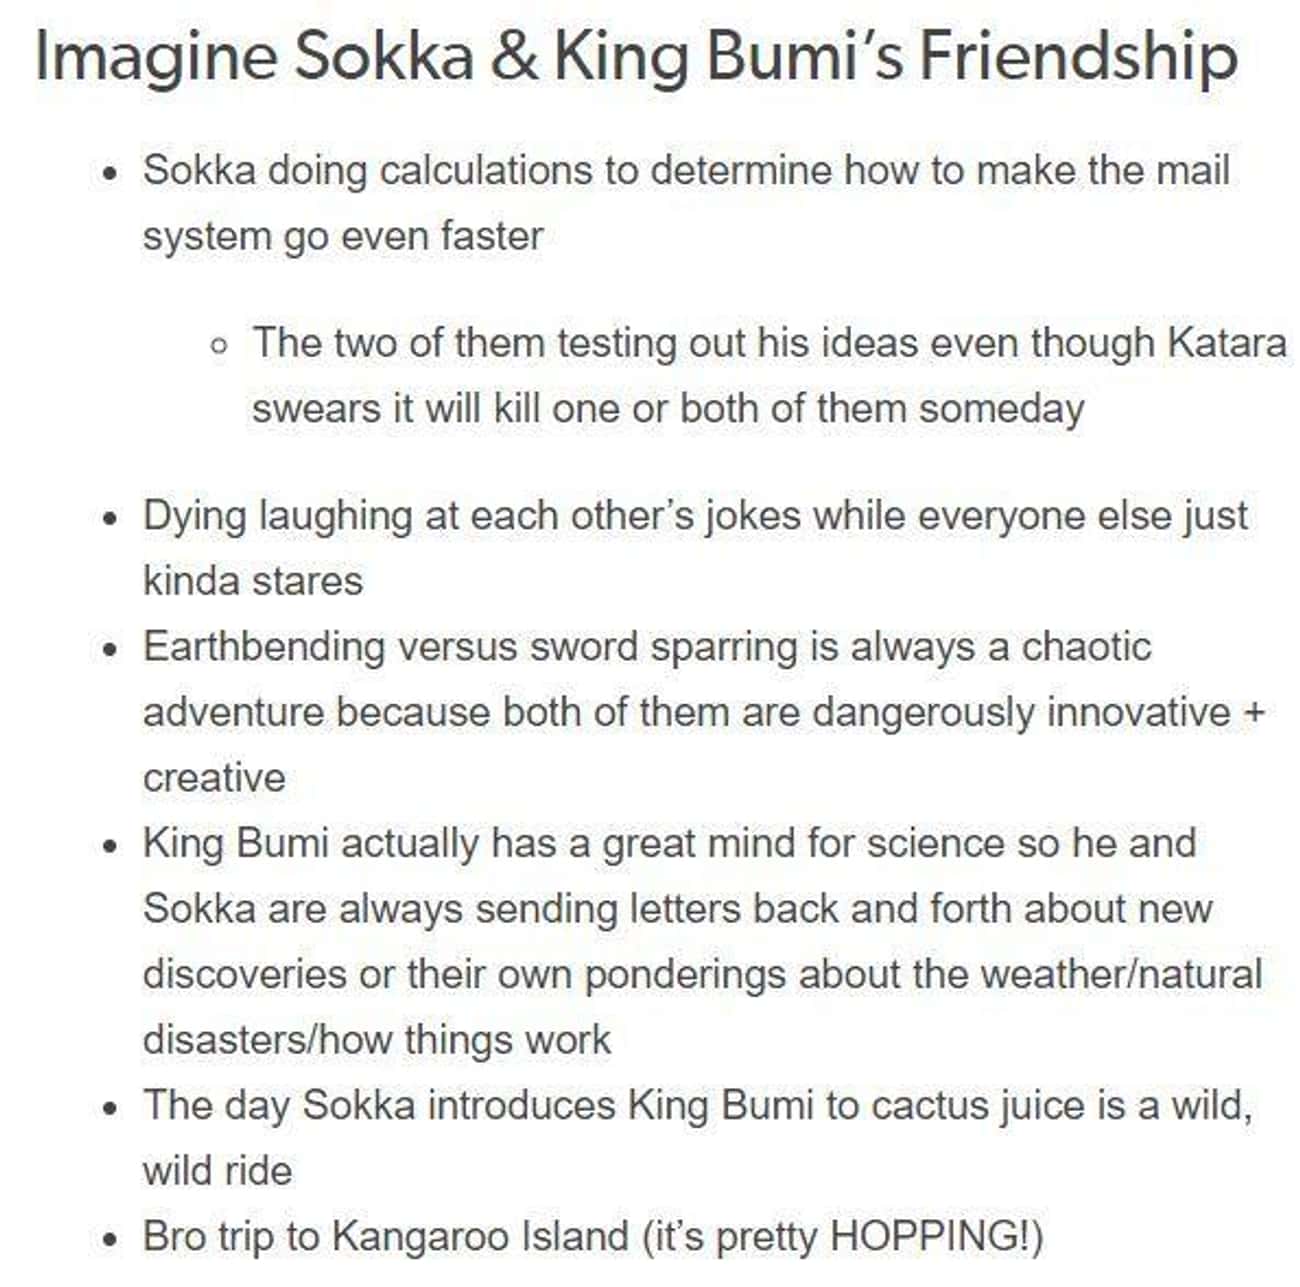 Sokka and King Bumi: New BFFs